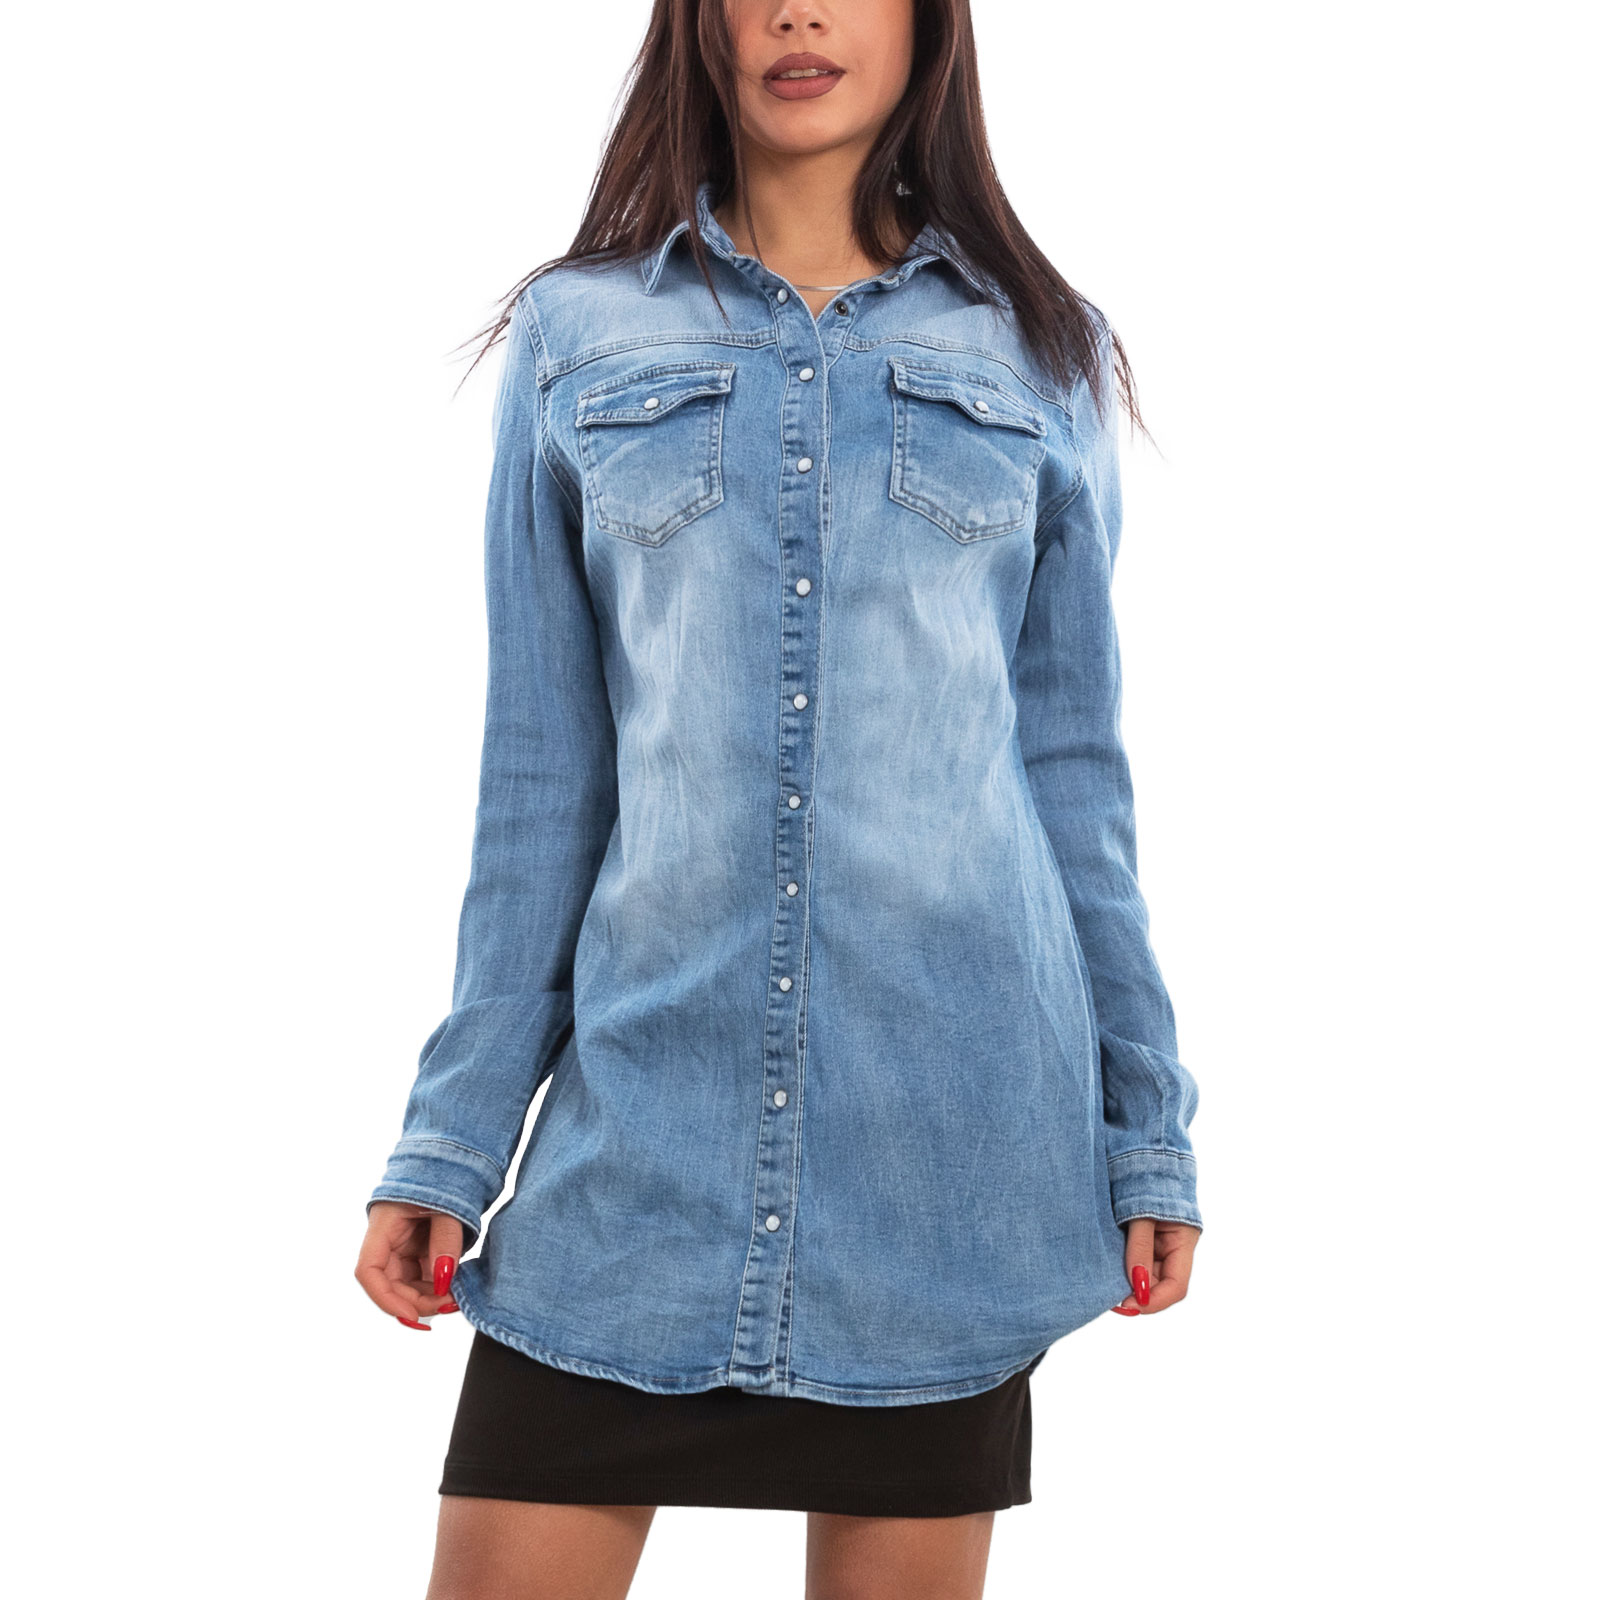 Camicia jeans donna lunga elasticizzata aderente lunga giacca TOOCOOL F8008